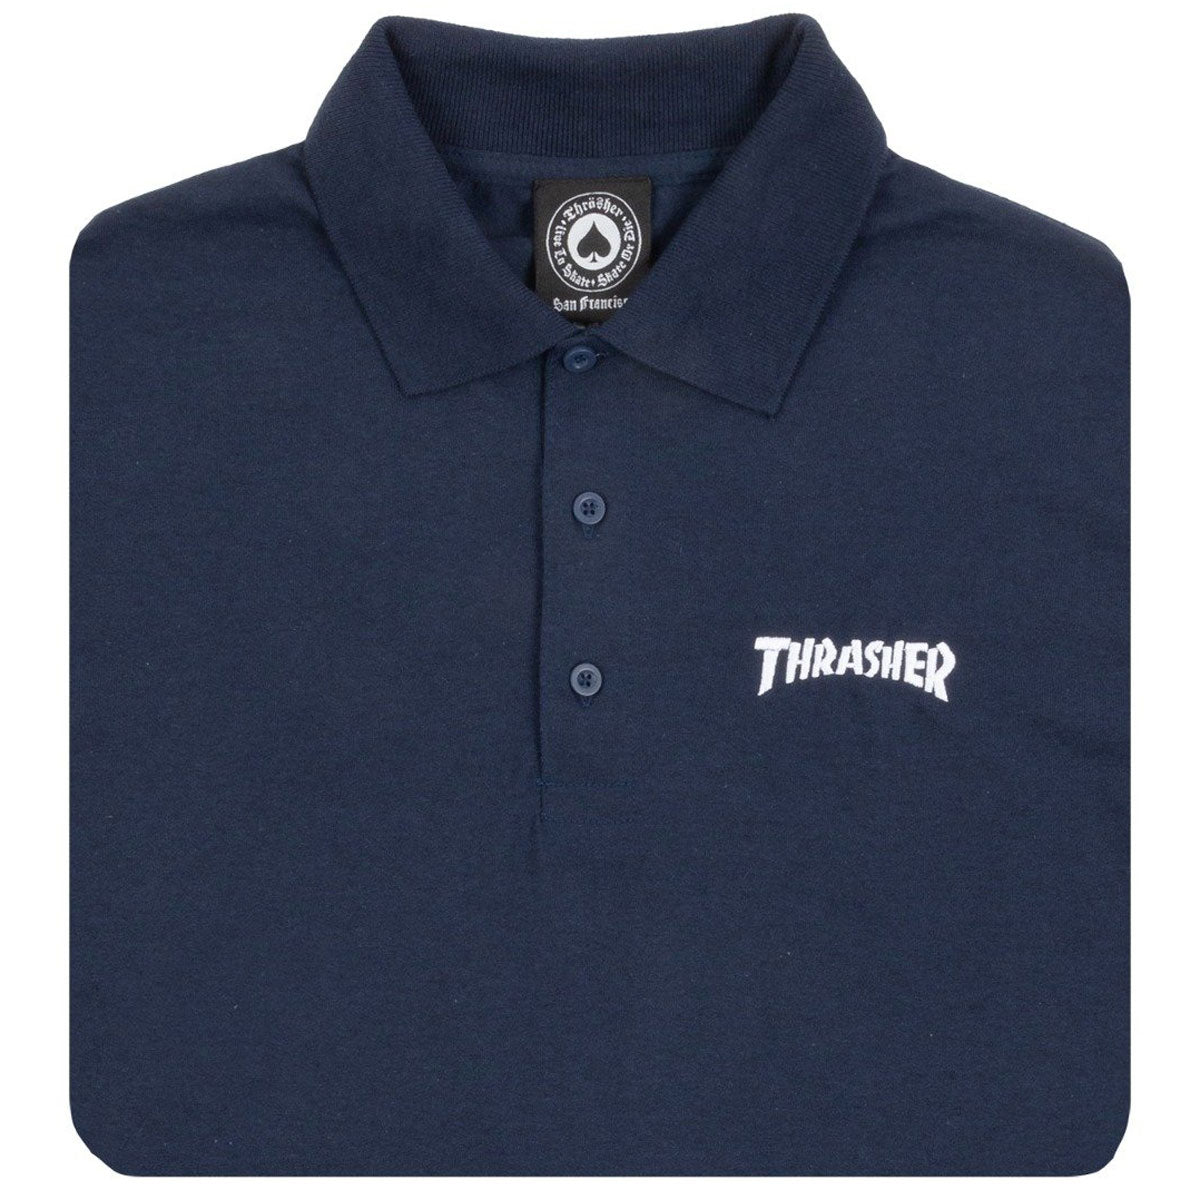 Thrasher Logo Embroidered Polo Shirt - Navy image 2